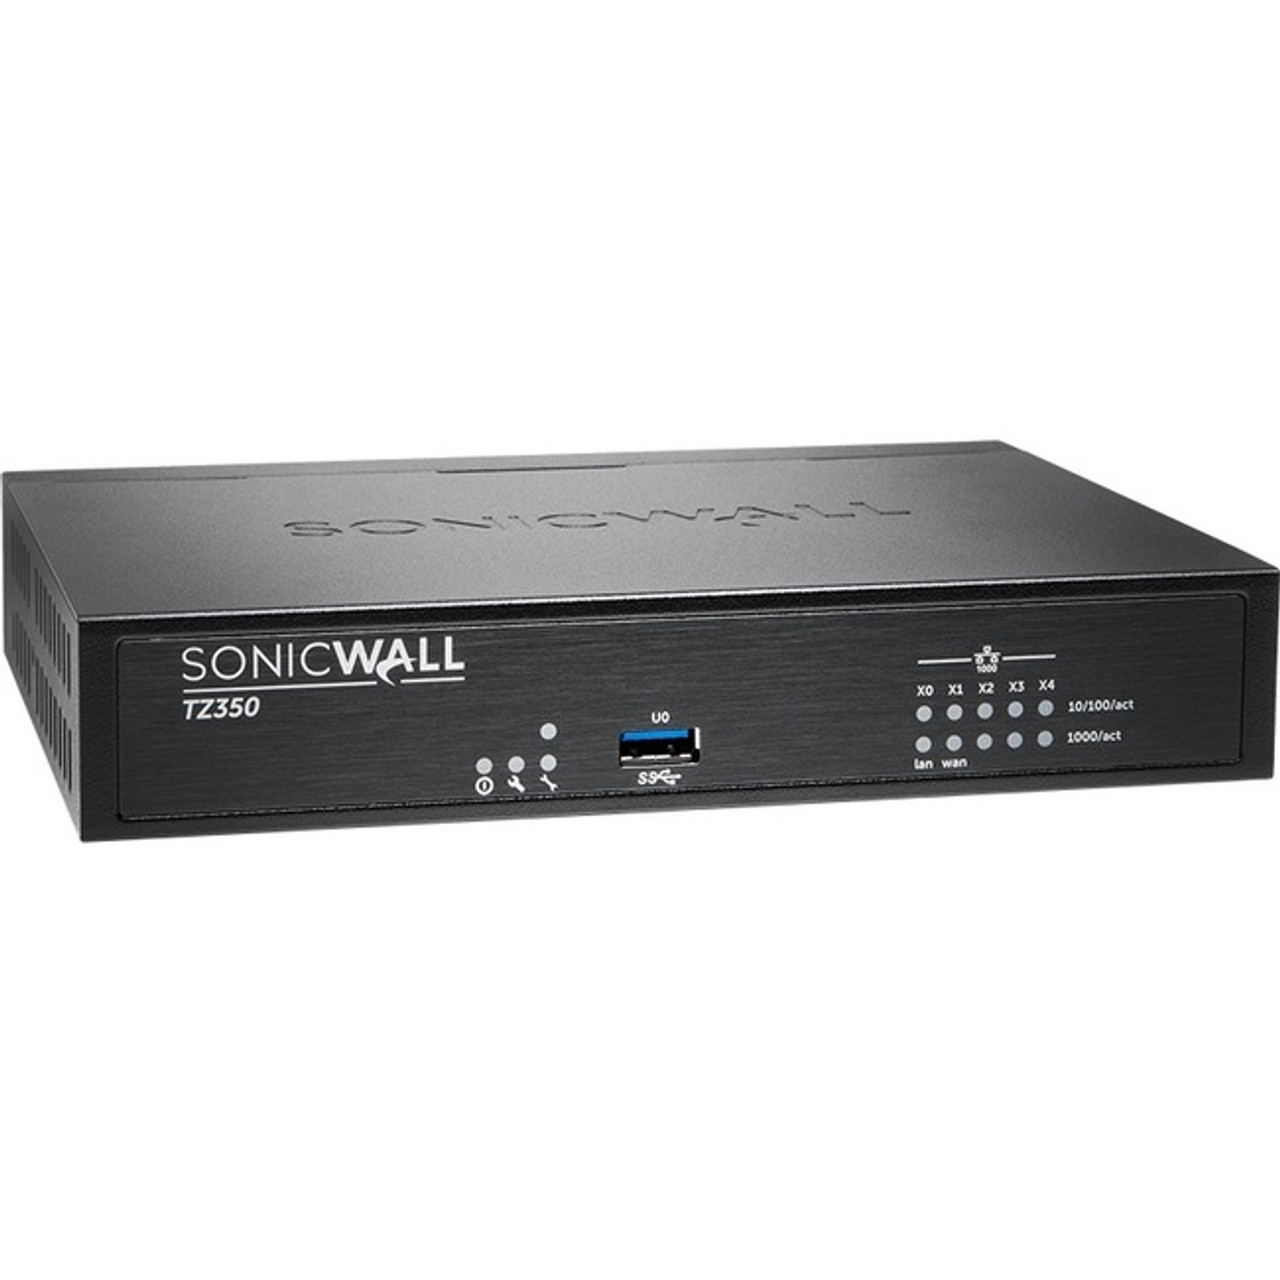 SonicWall TZ350 Network Security Appliance 02-SSC-0942 